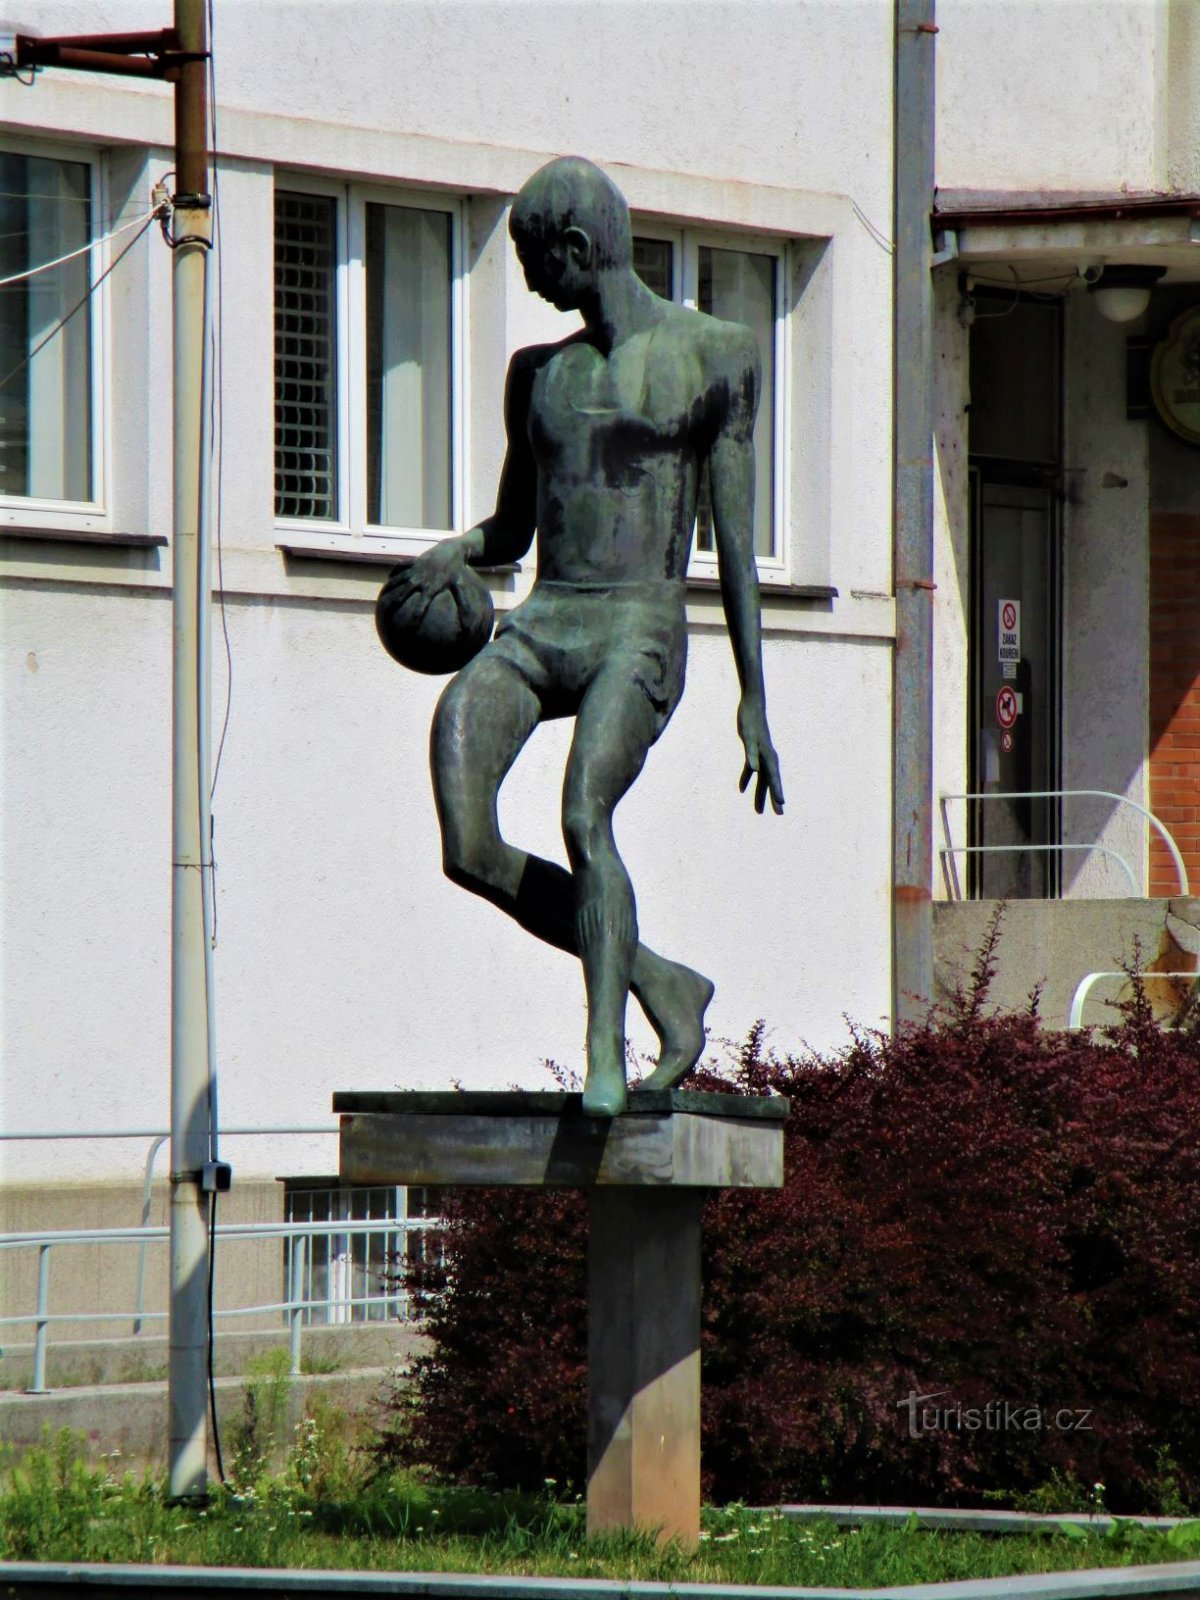 Estatua